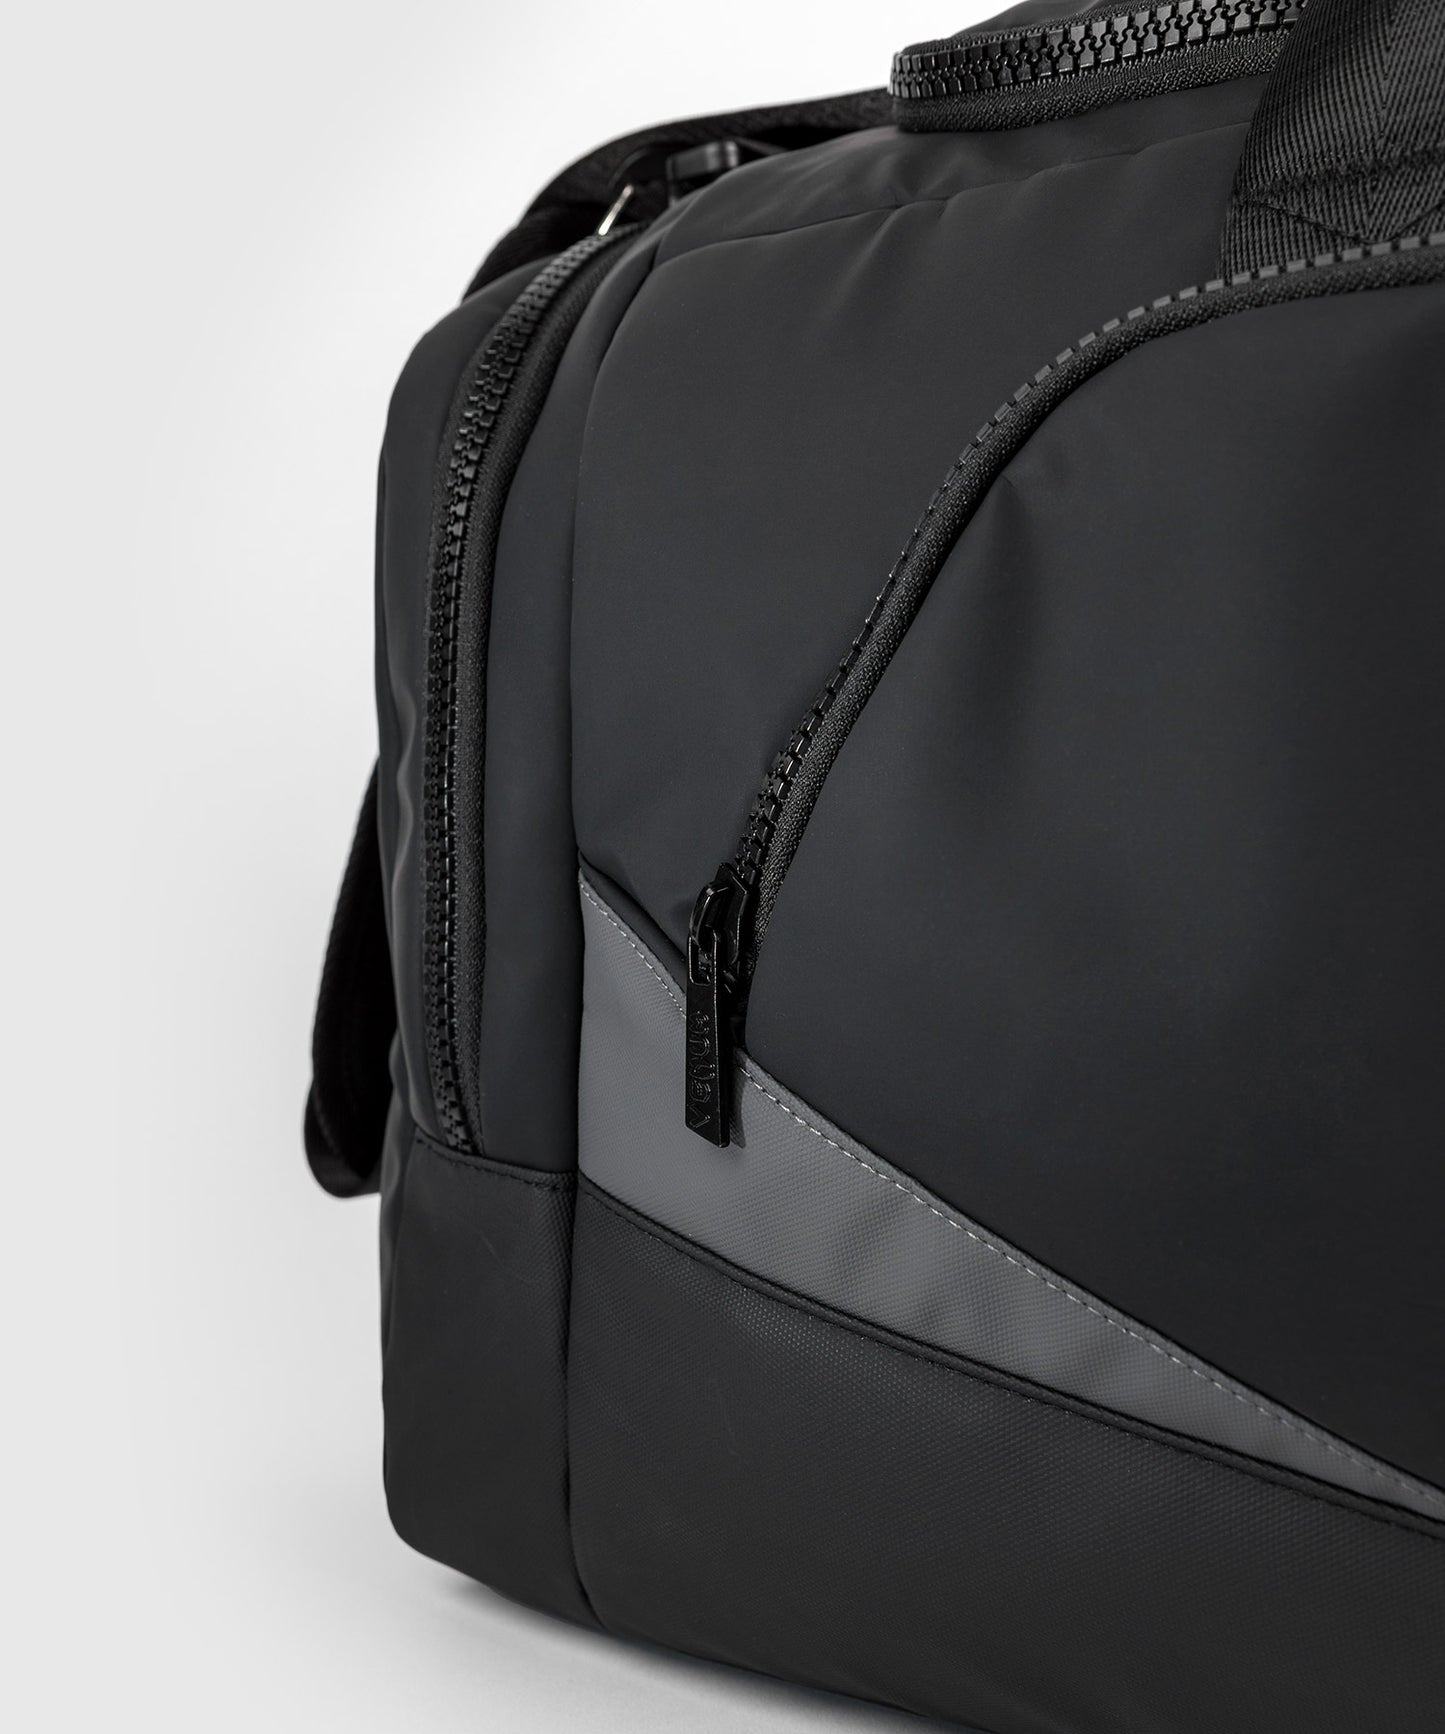 Venum Evo 2 Trainer Lite Duffle Bag - Black/Grey